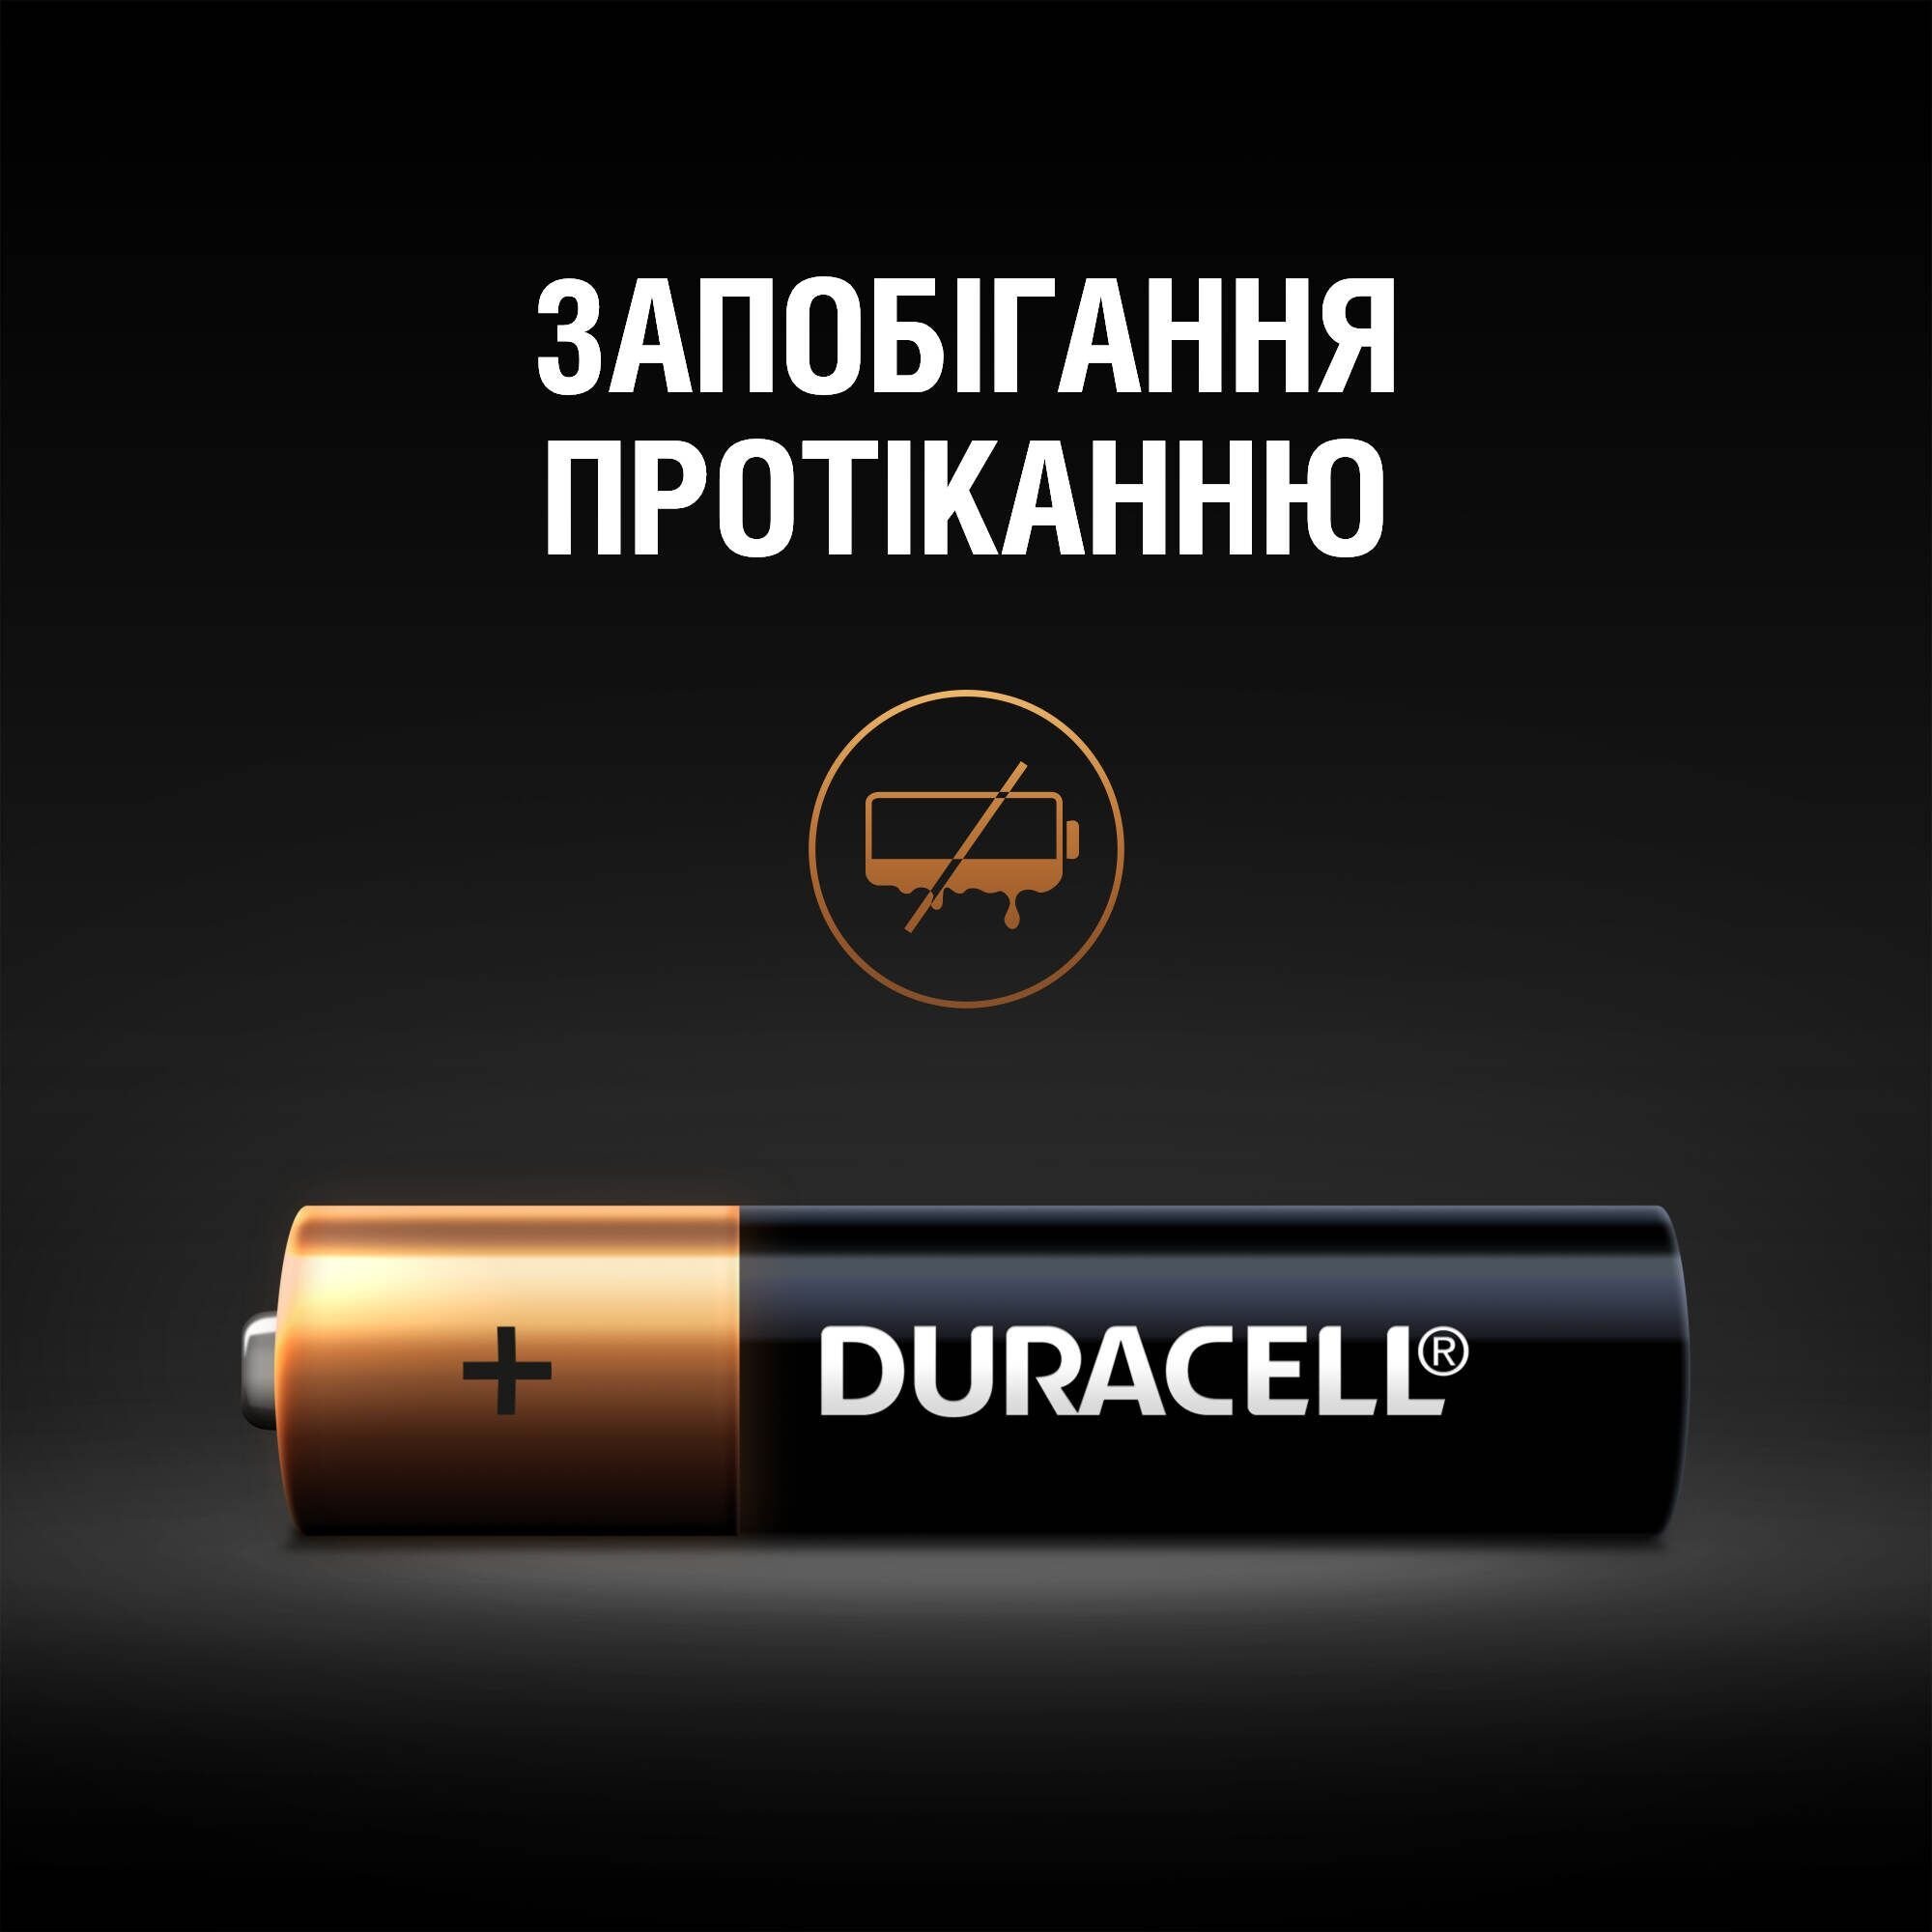 Щелочные батарейки мизинчиковые Duracell 1.5 V AAA LR03/MN2400, 5 шт. - фото 5